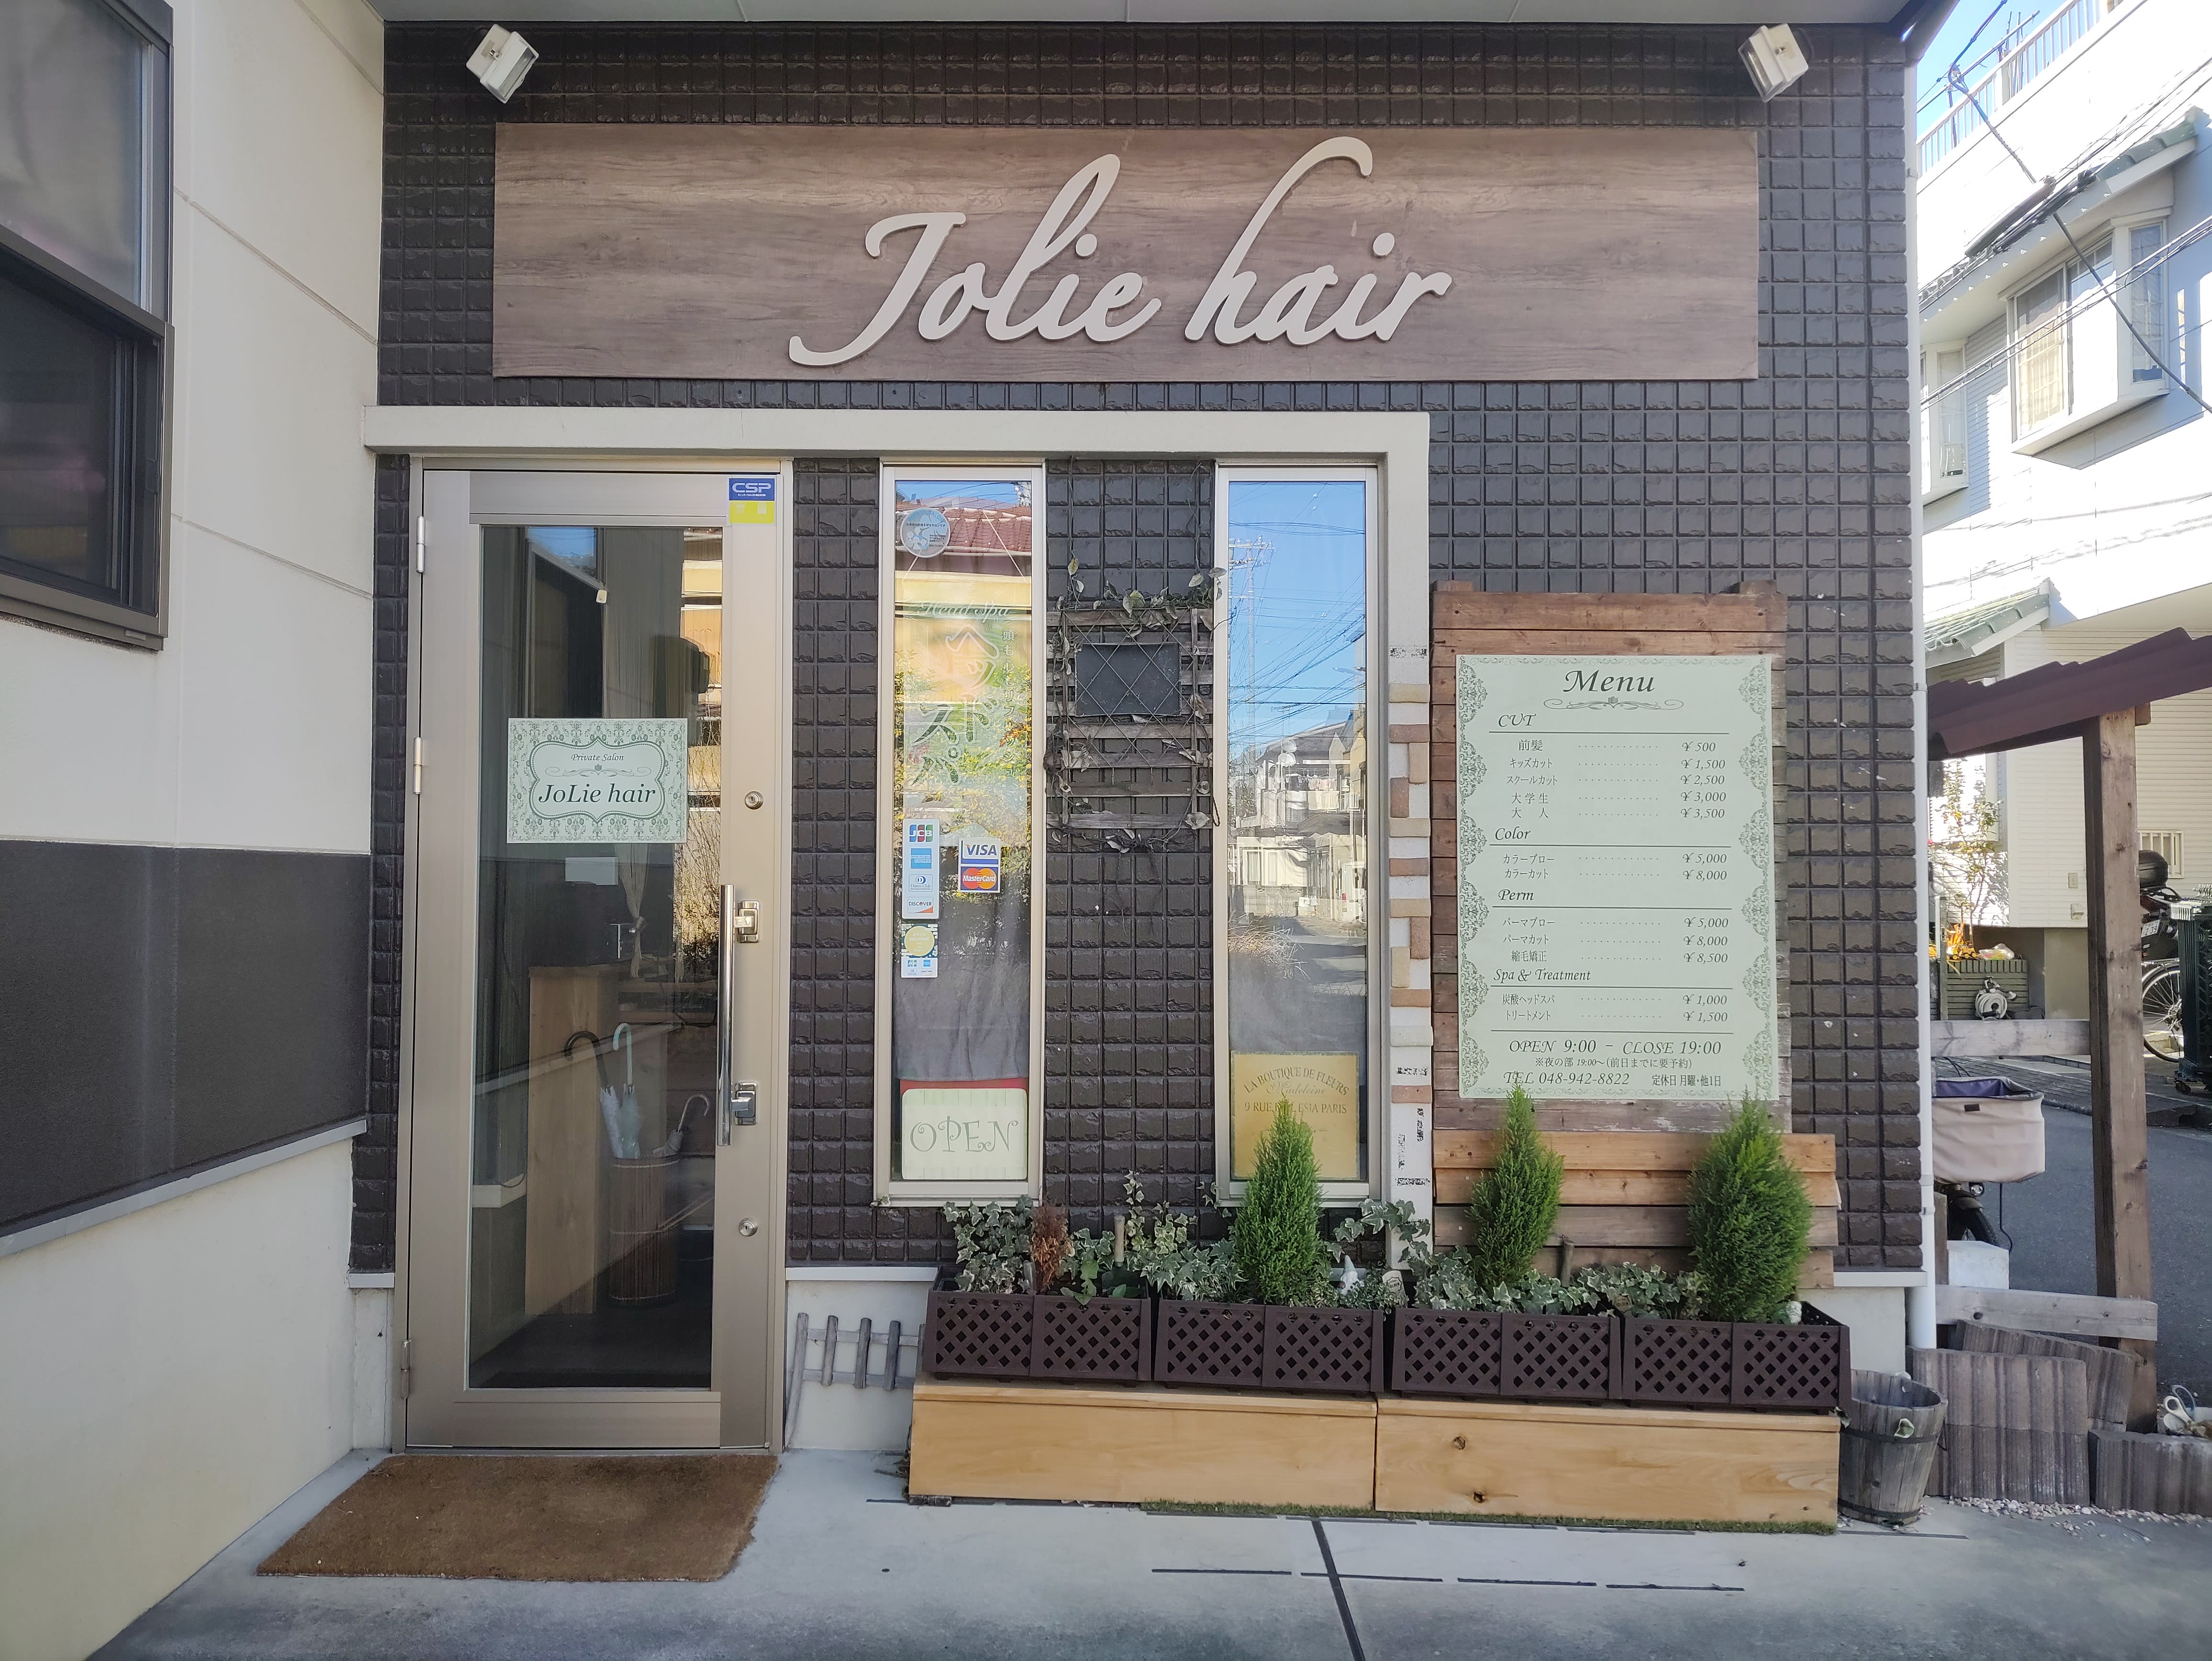 JoLie hairのアイキャッチ画像